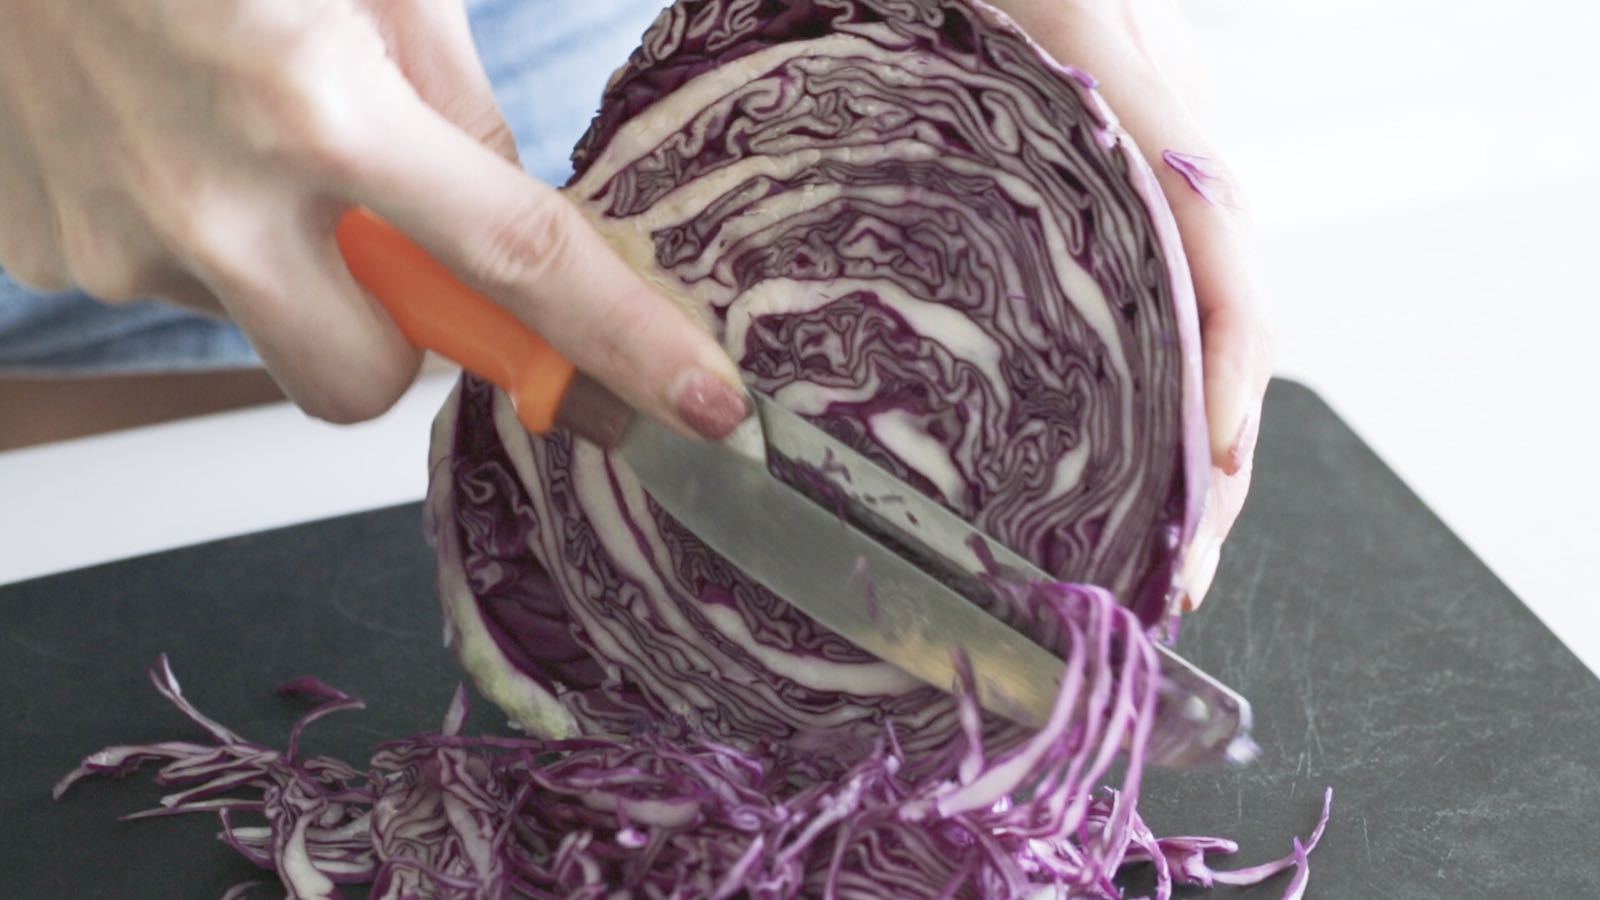 purple-cabbage